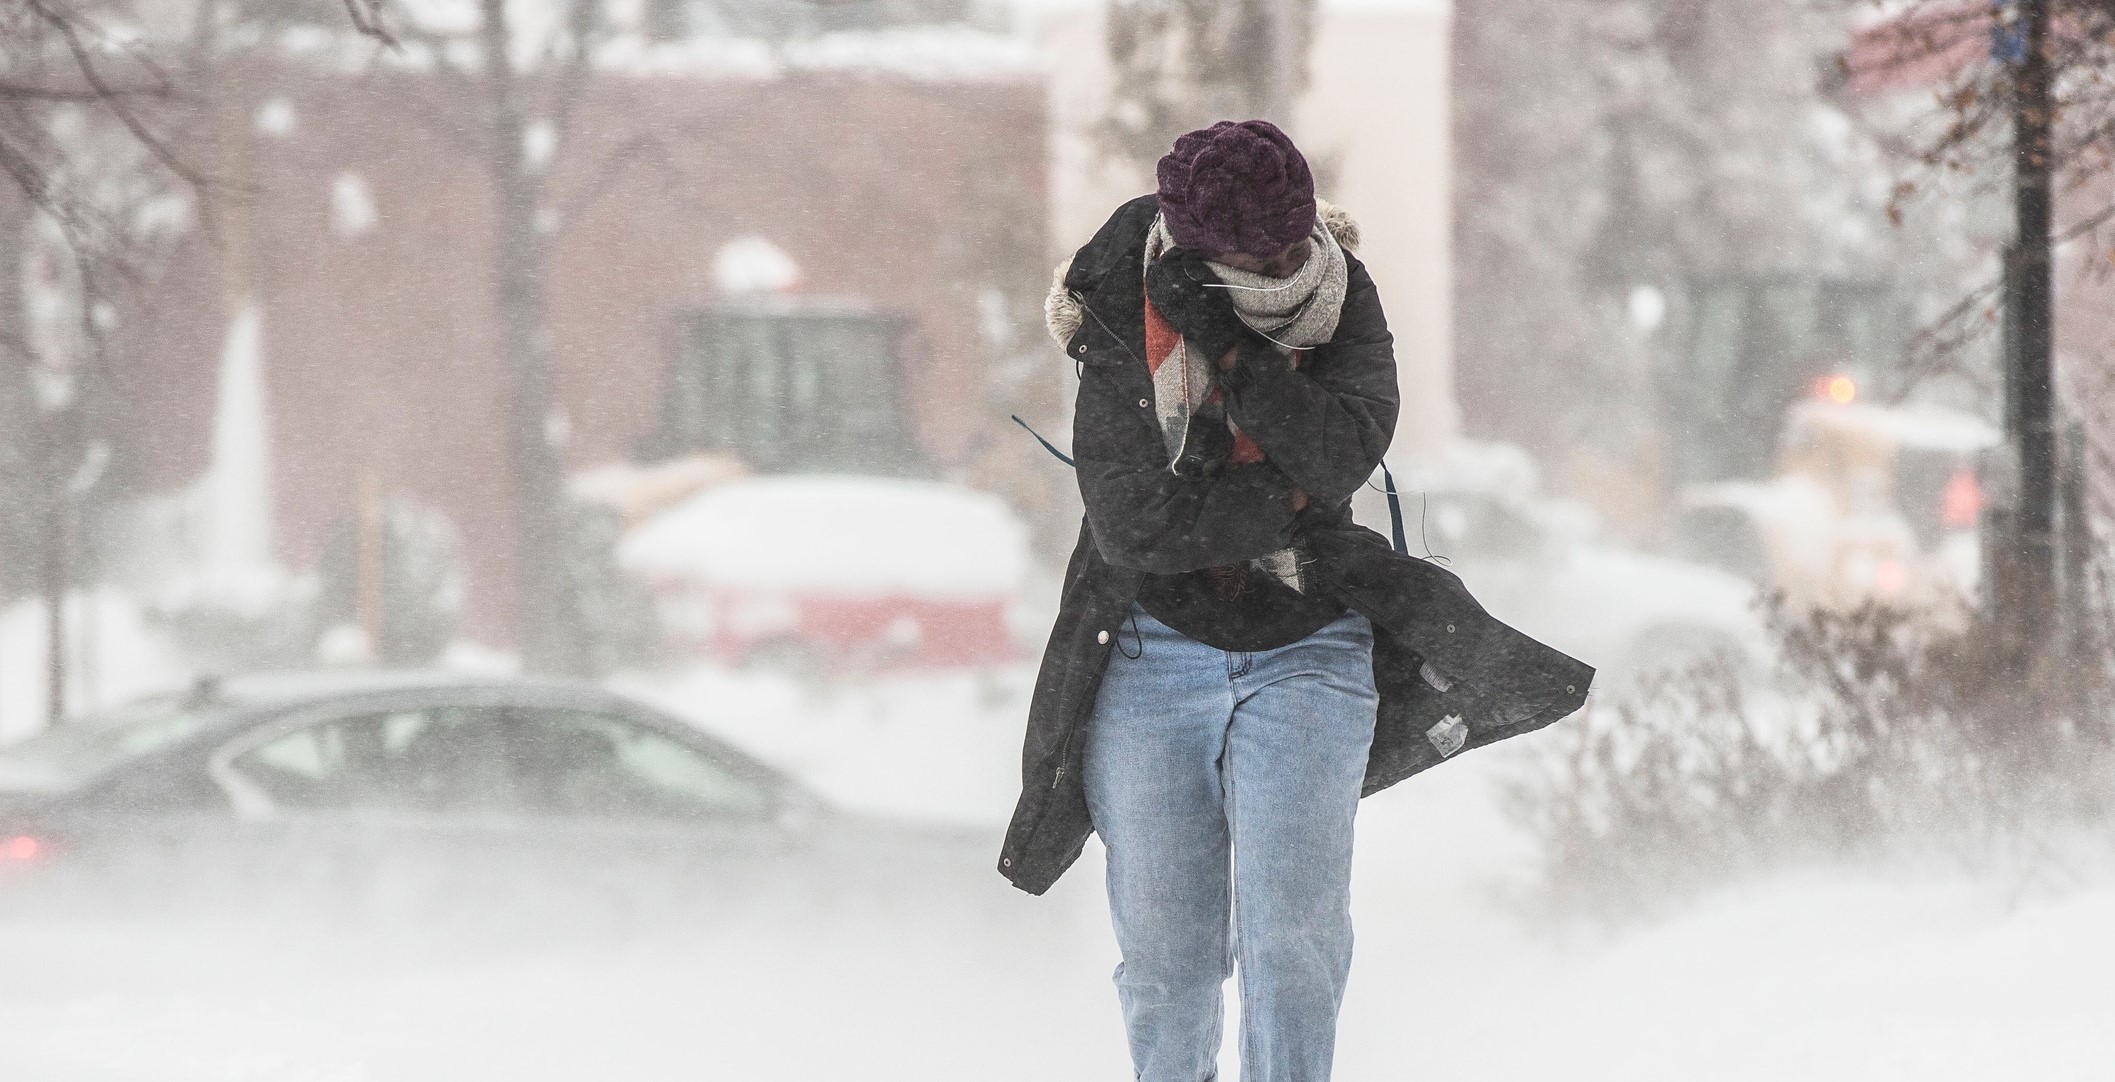 Doctors urge caution against cold weather health hazards